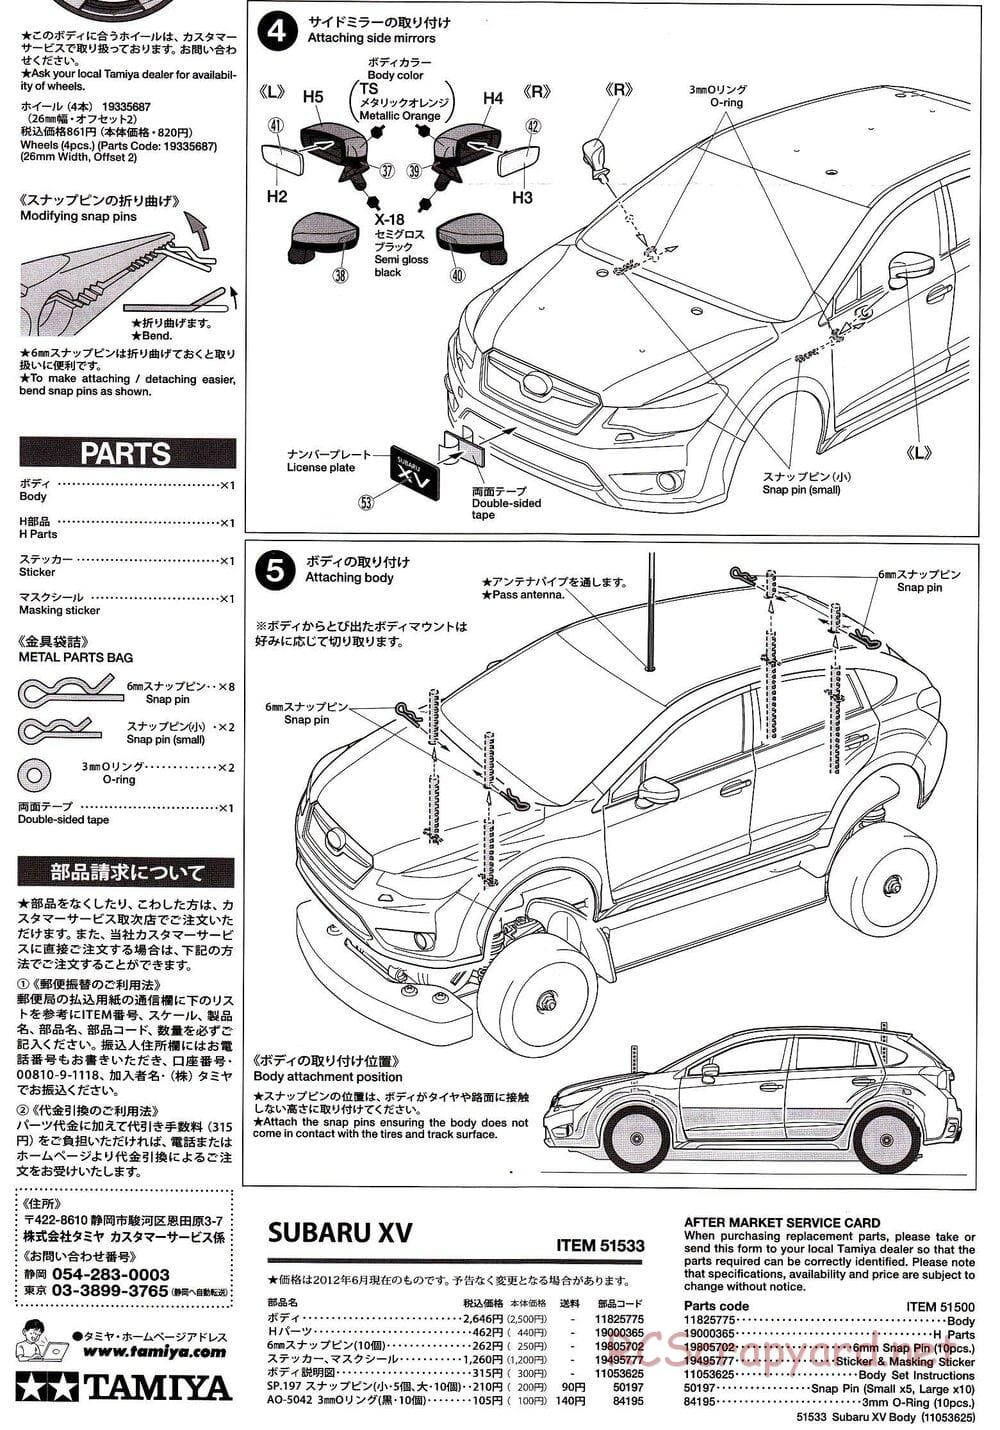 Tamiya - Subaru XV - TT-02 Chassis - Body Manual - Page 4